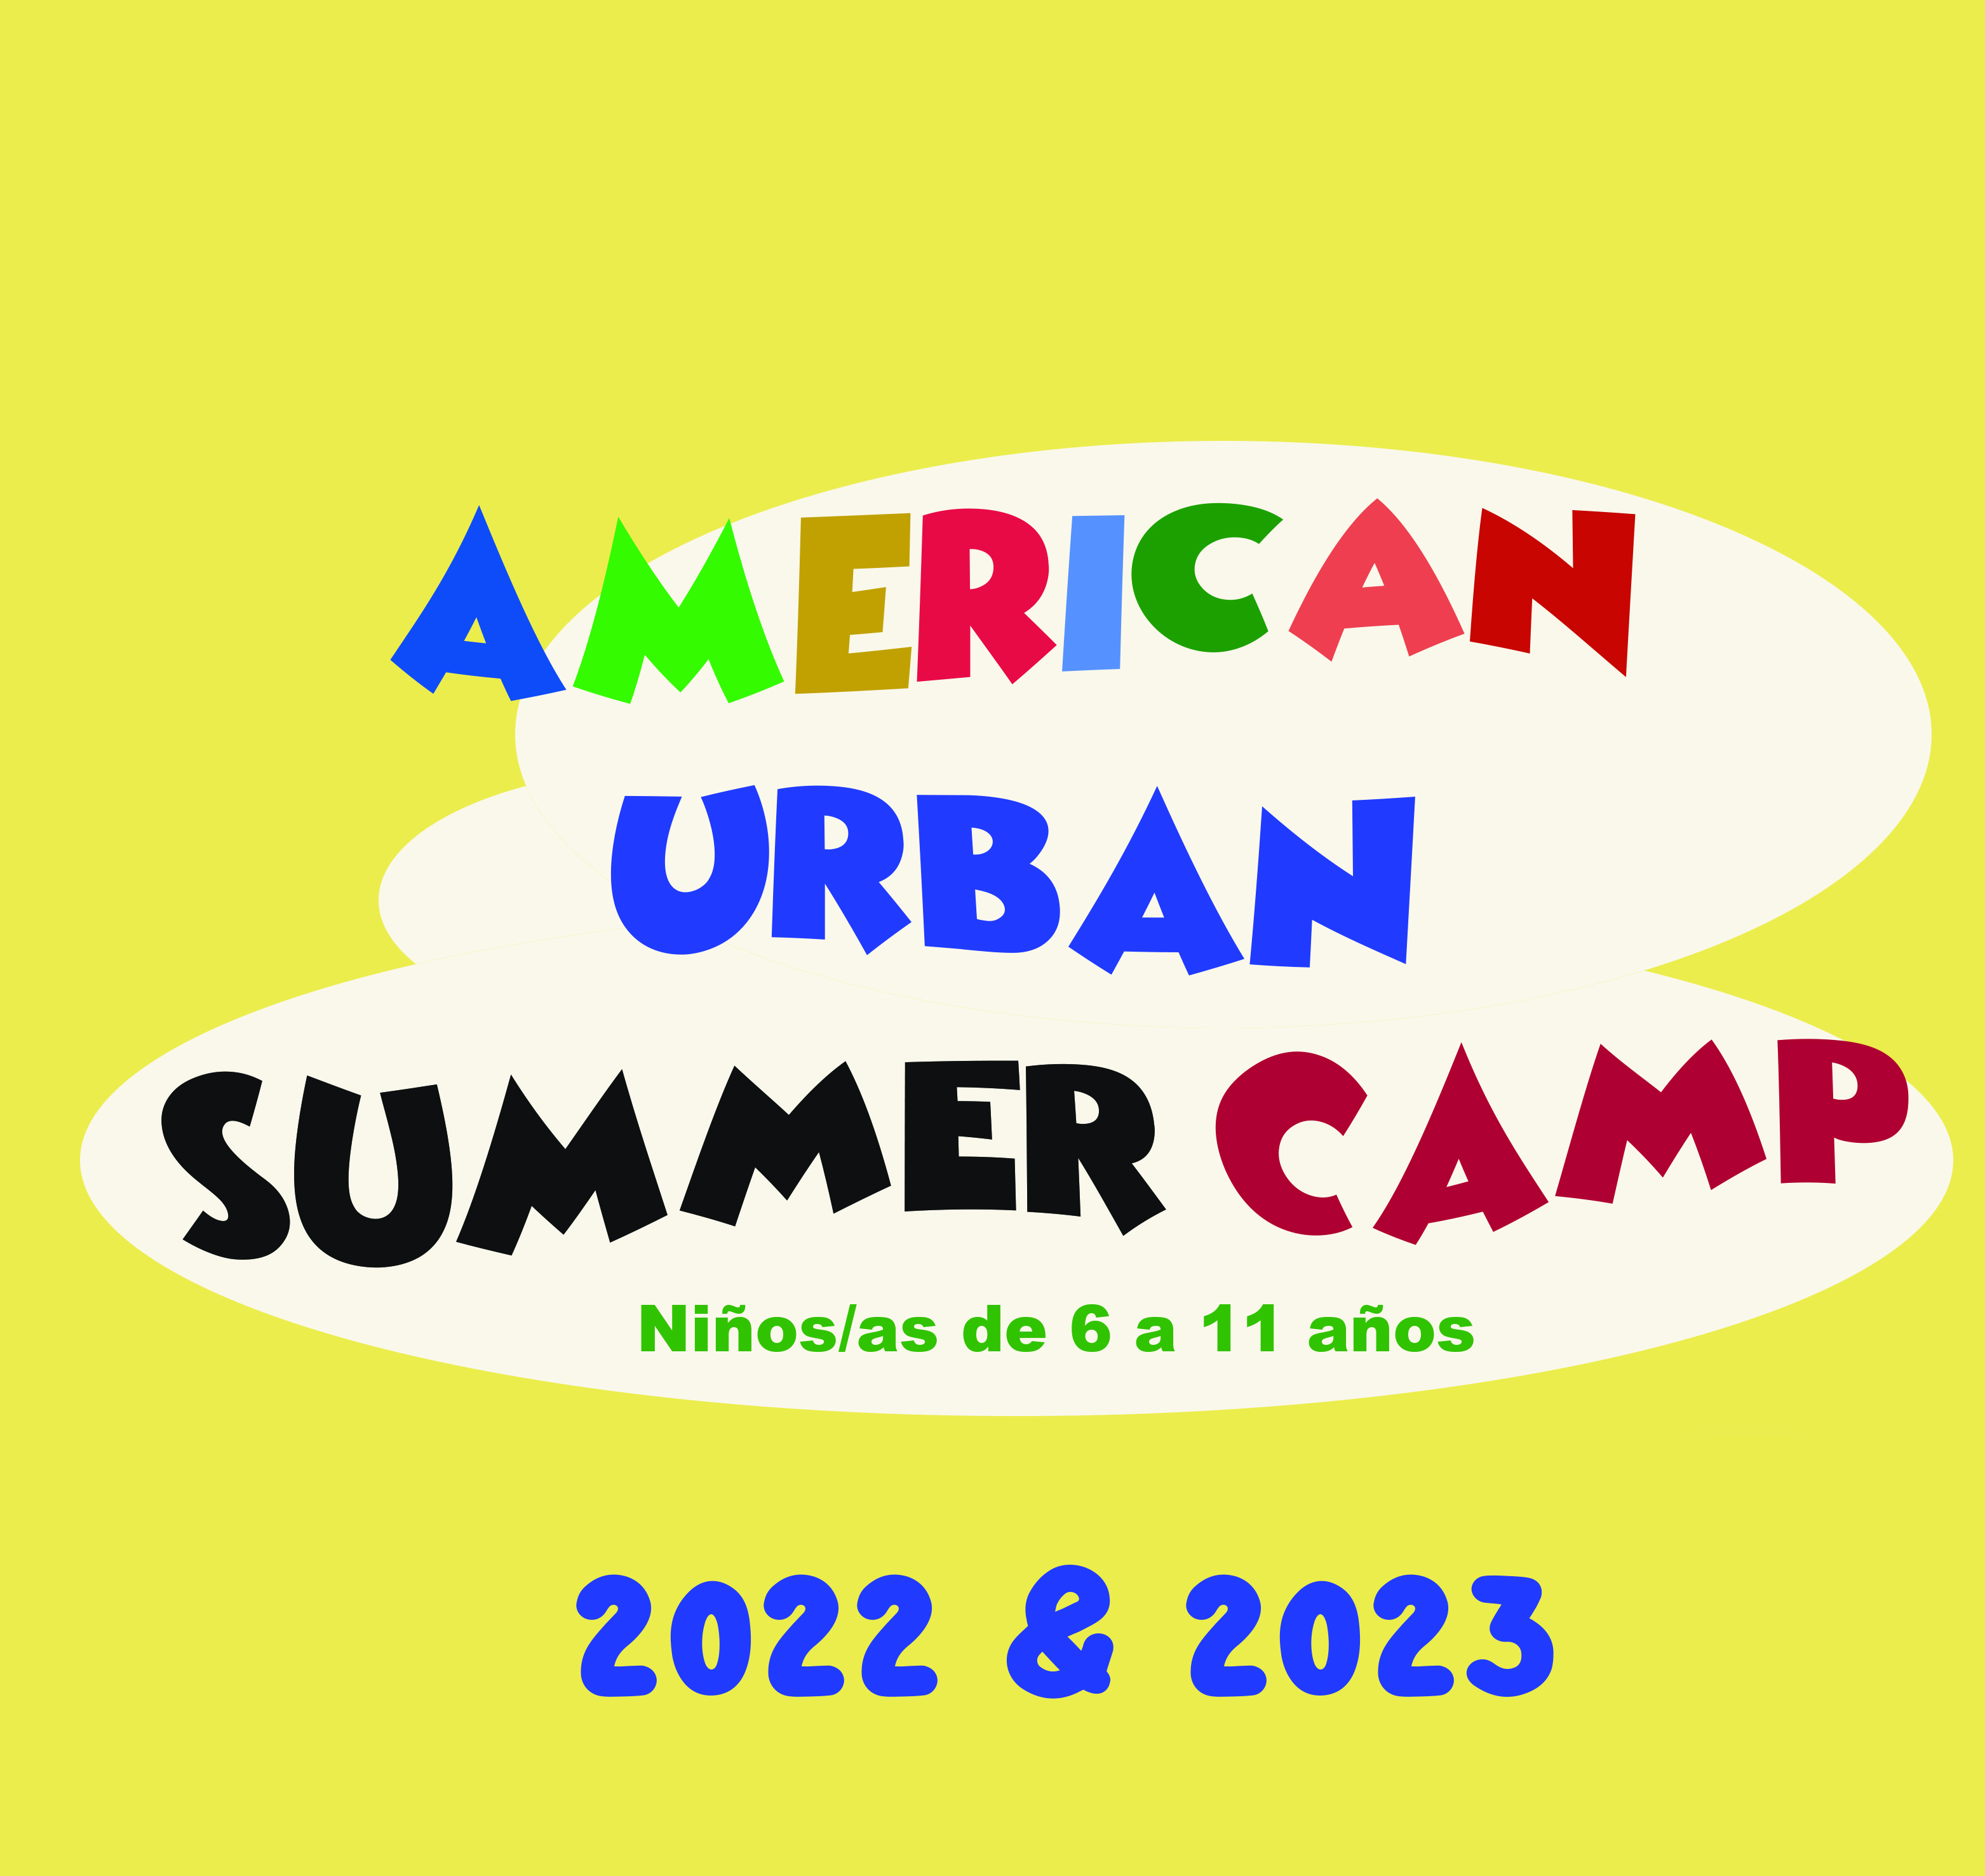 Summer camp 2022-23
